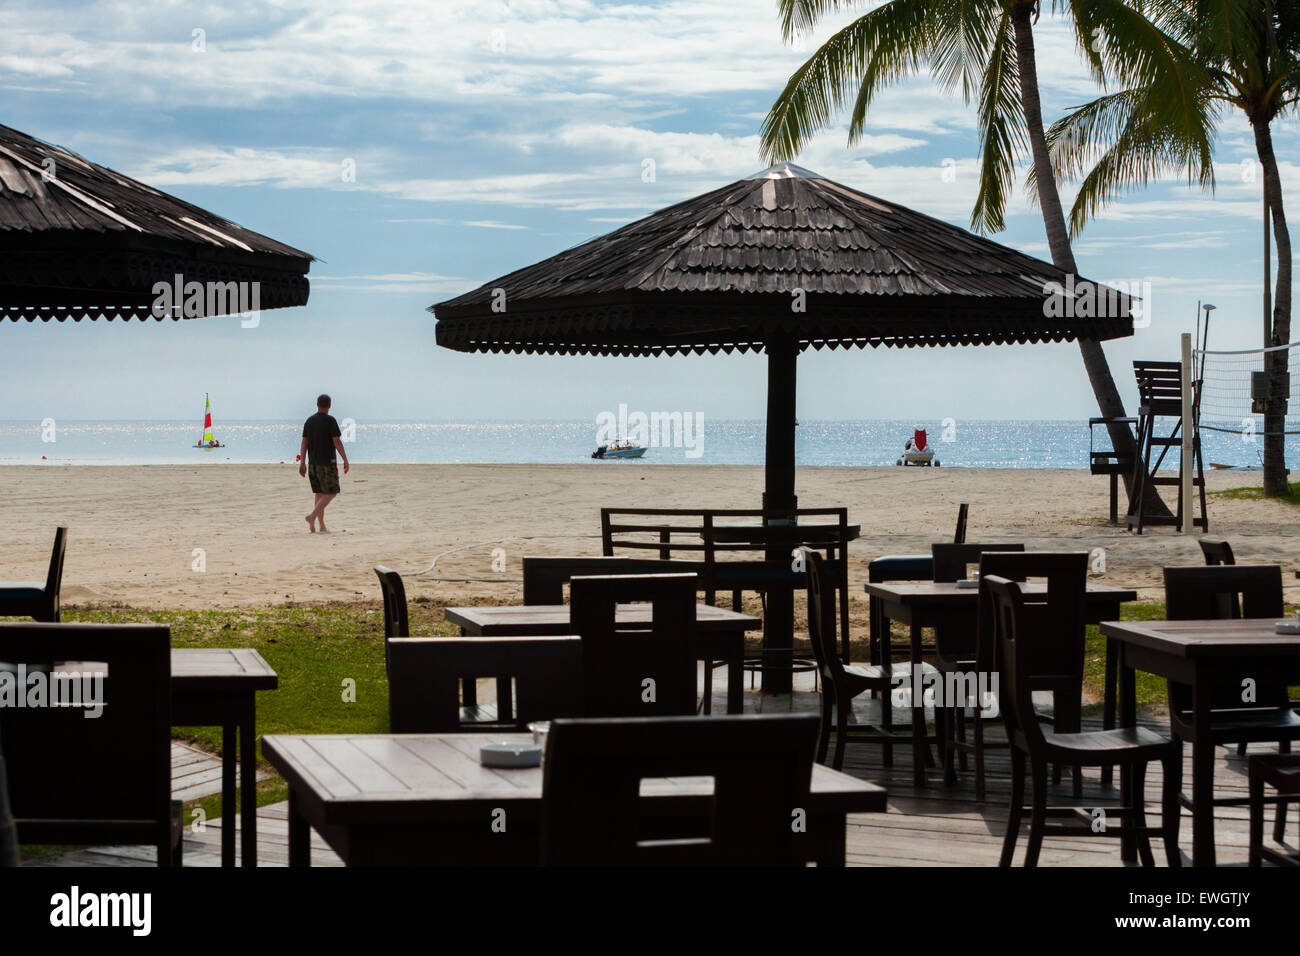 View of a cafe overlooking sandy beach and sea at Shangri-la Rasa Ria beach resort in Kota Kinabalu, Sabah, Malaysia. Stock Photo